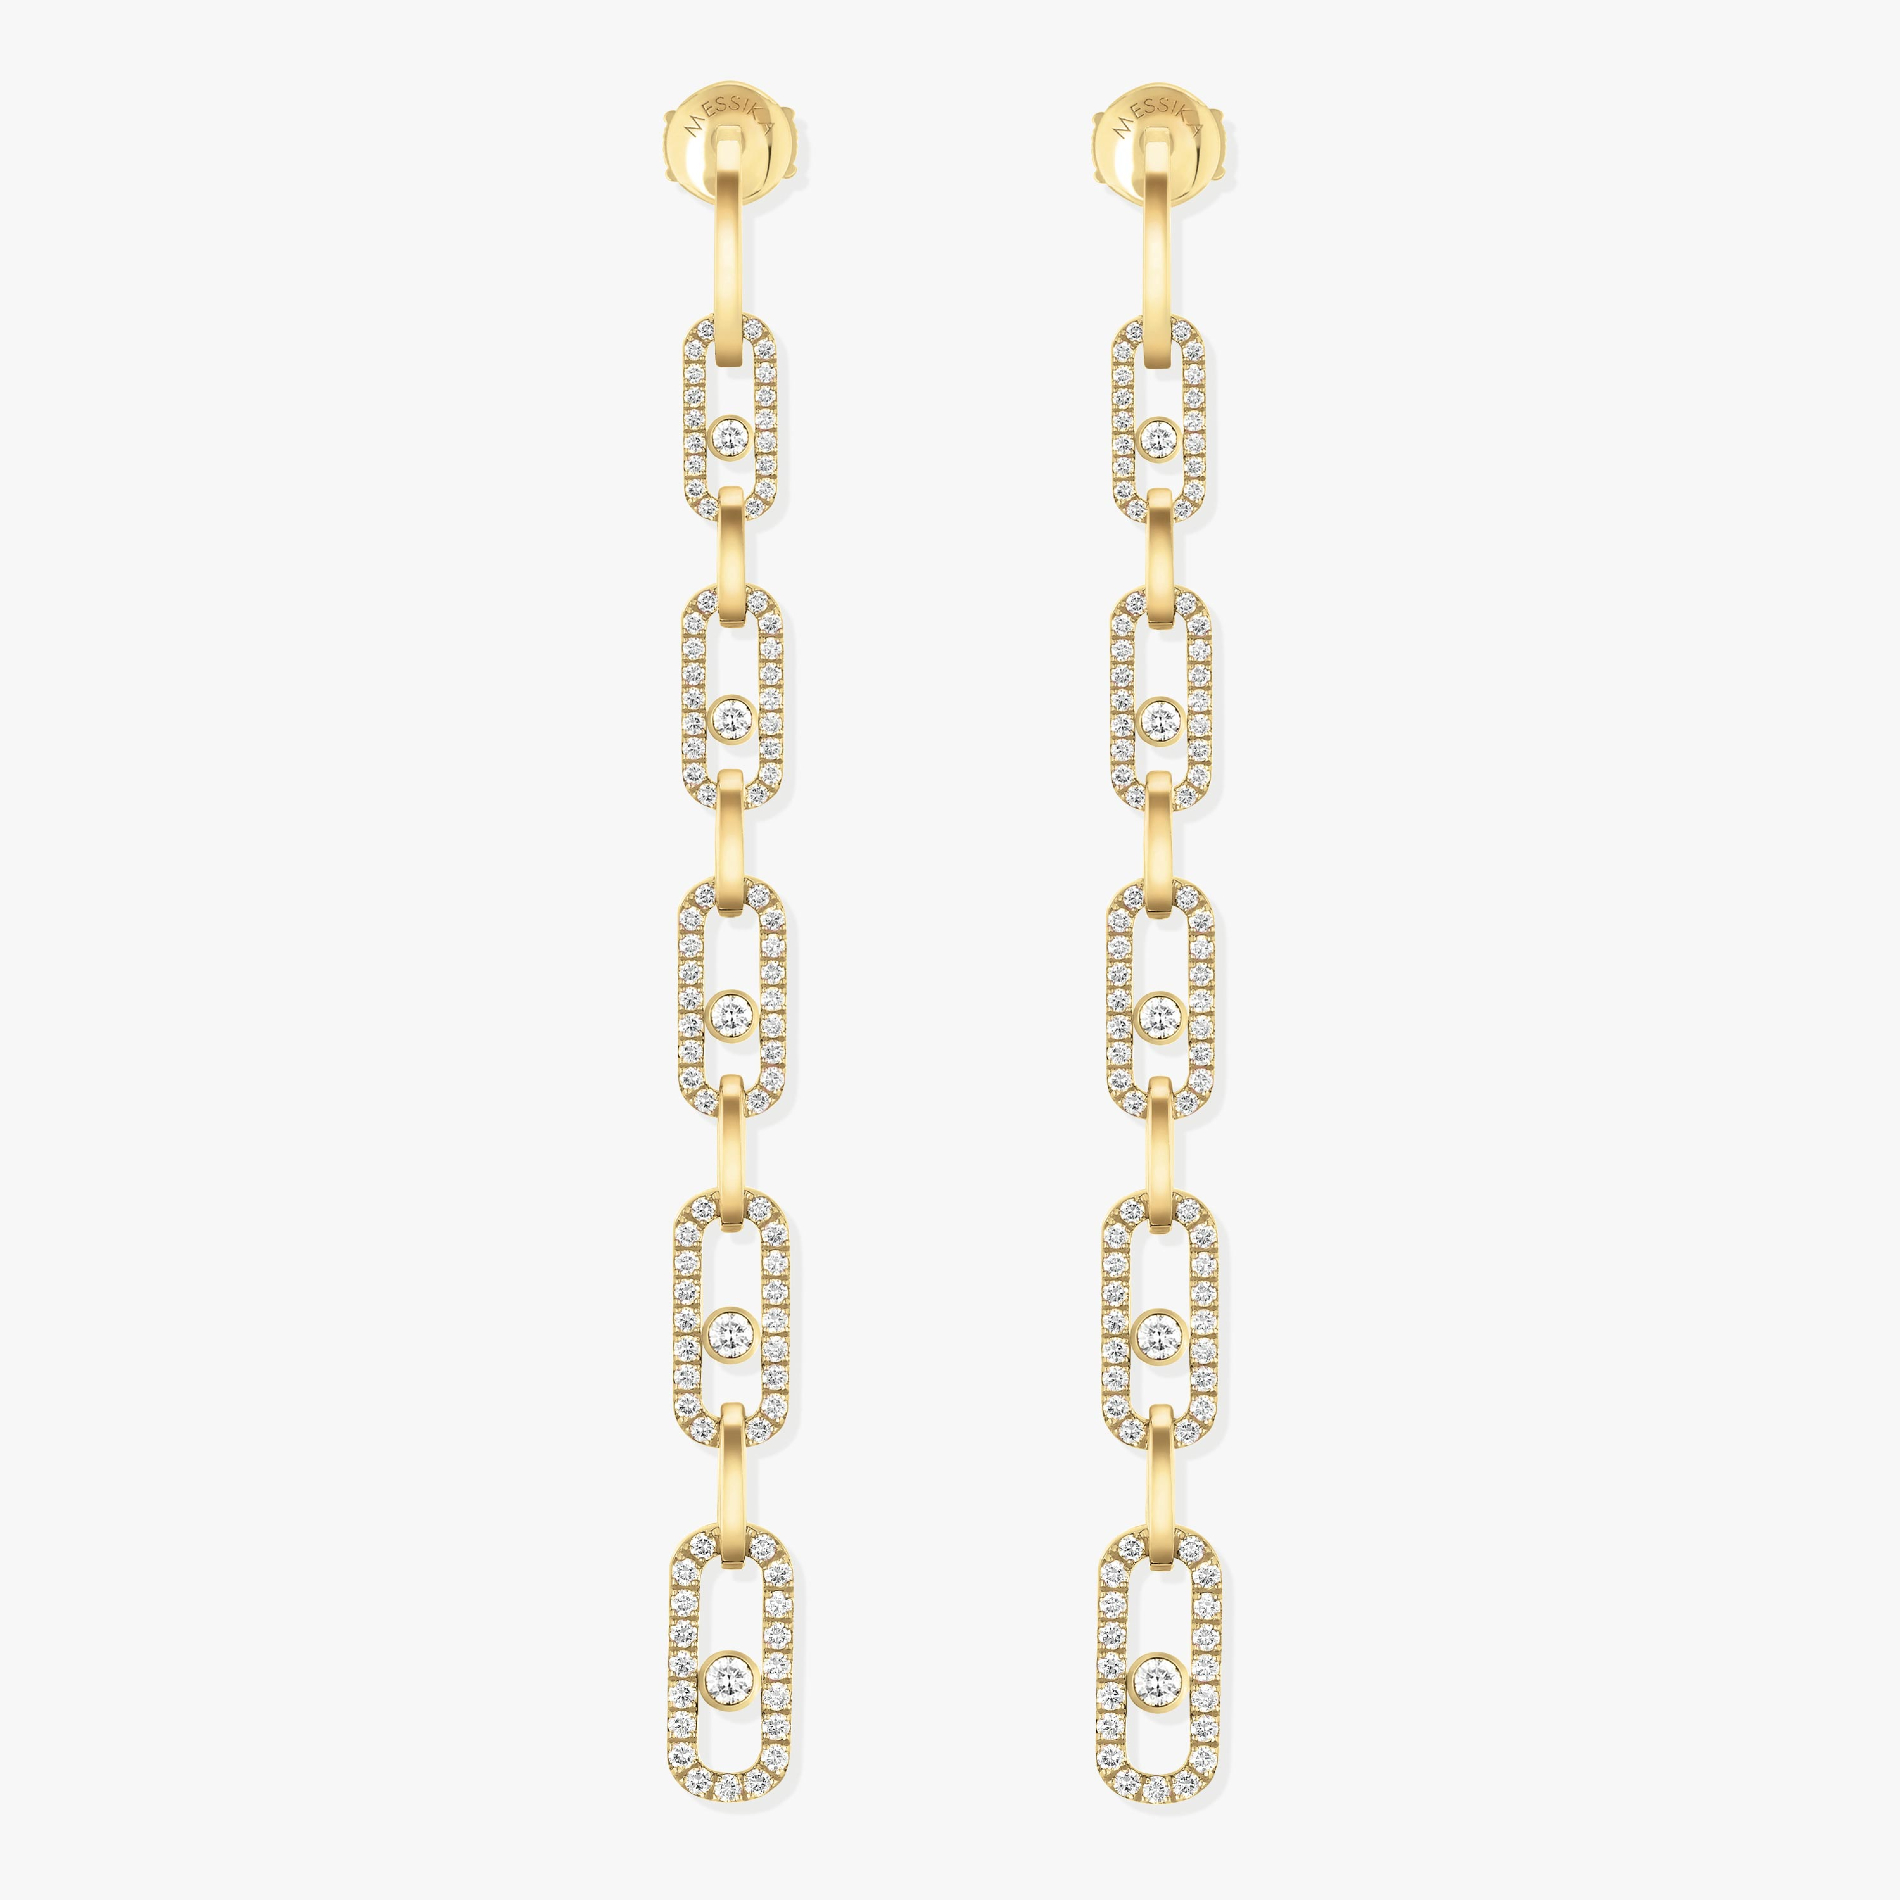 Move Link Multi Pendant Earrings Yellow Gold For Her Diamond Earrings 12011-YG